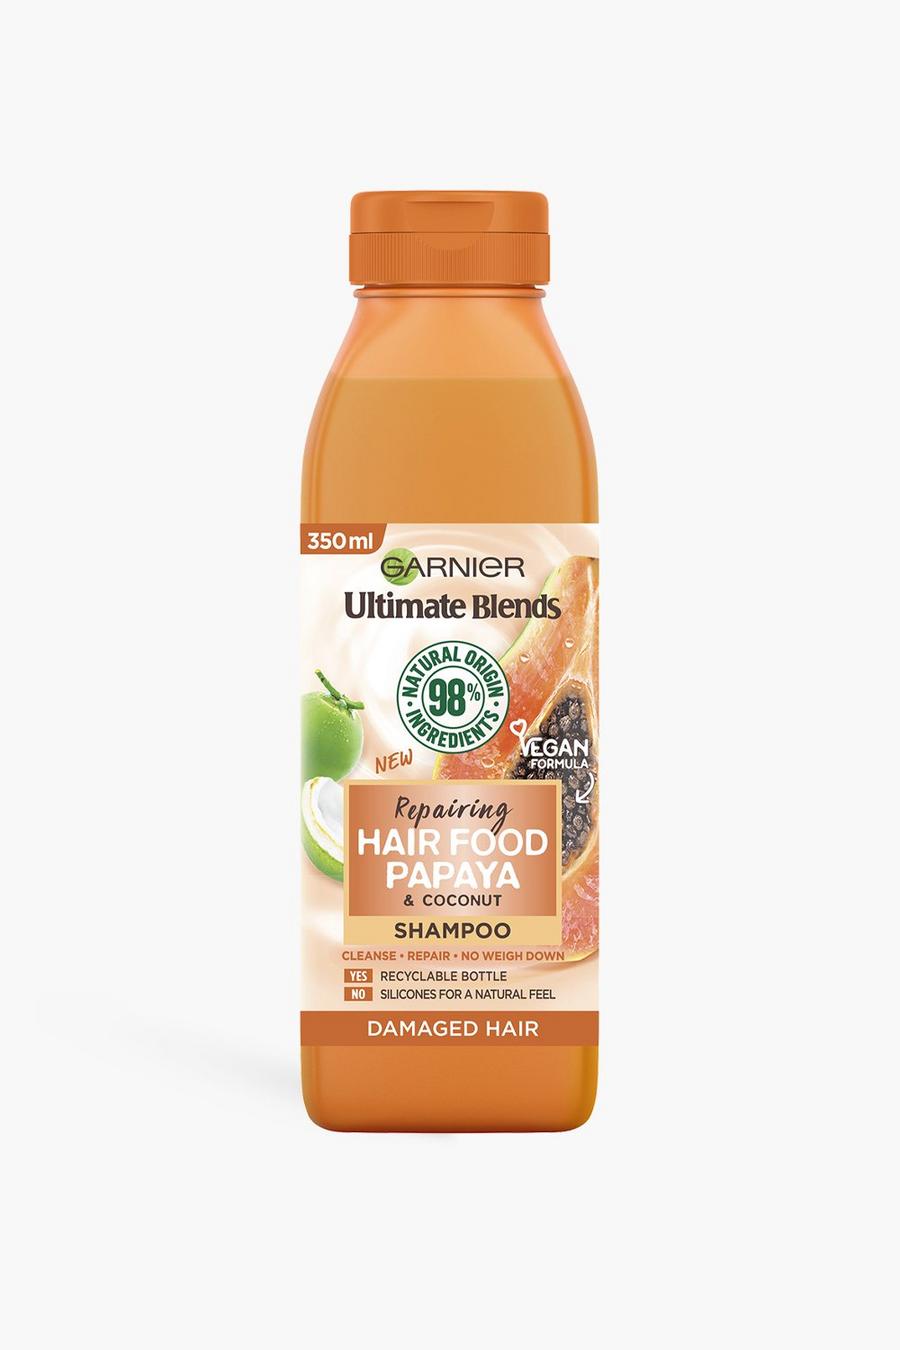 Orange Garnier Ultimate Blends Repairing Hair Food Papaya Shampoo For Damaged Hair 350ml